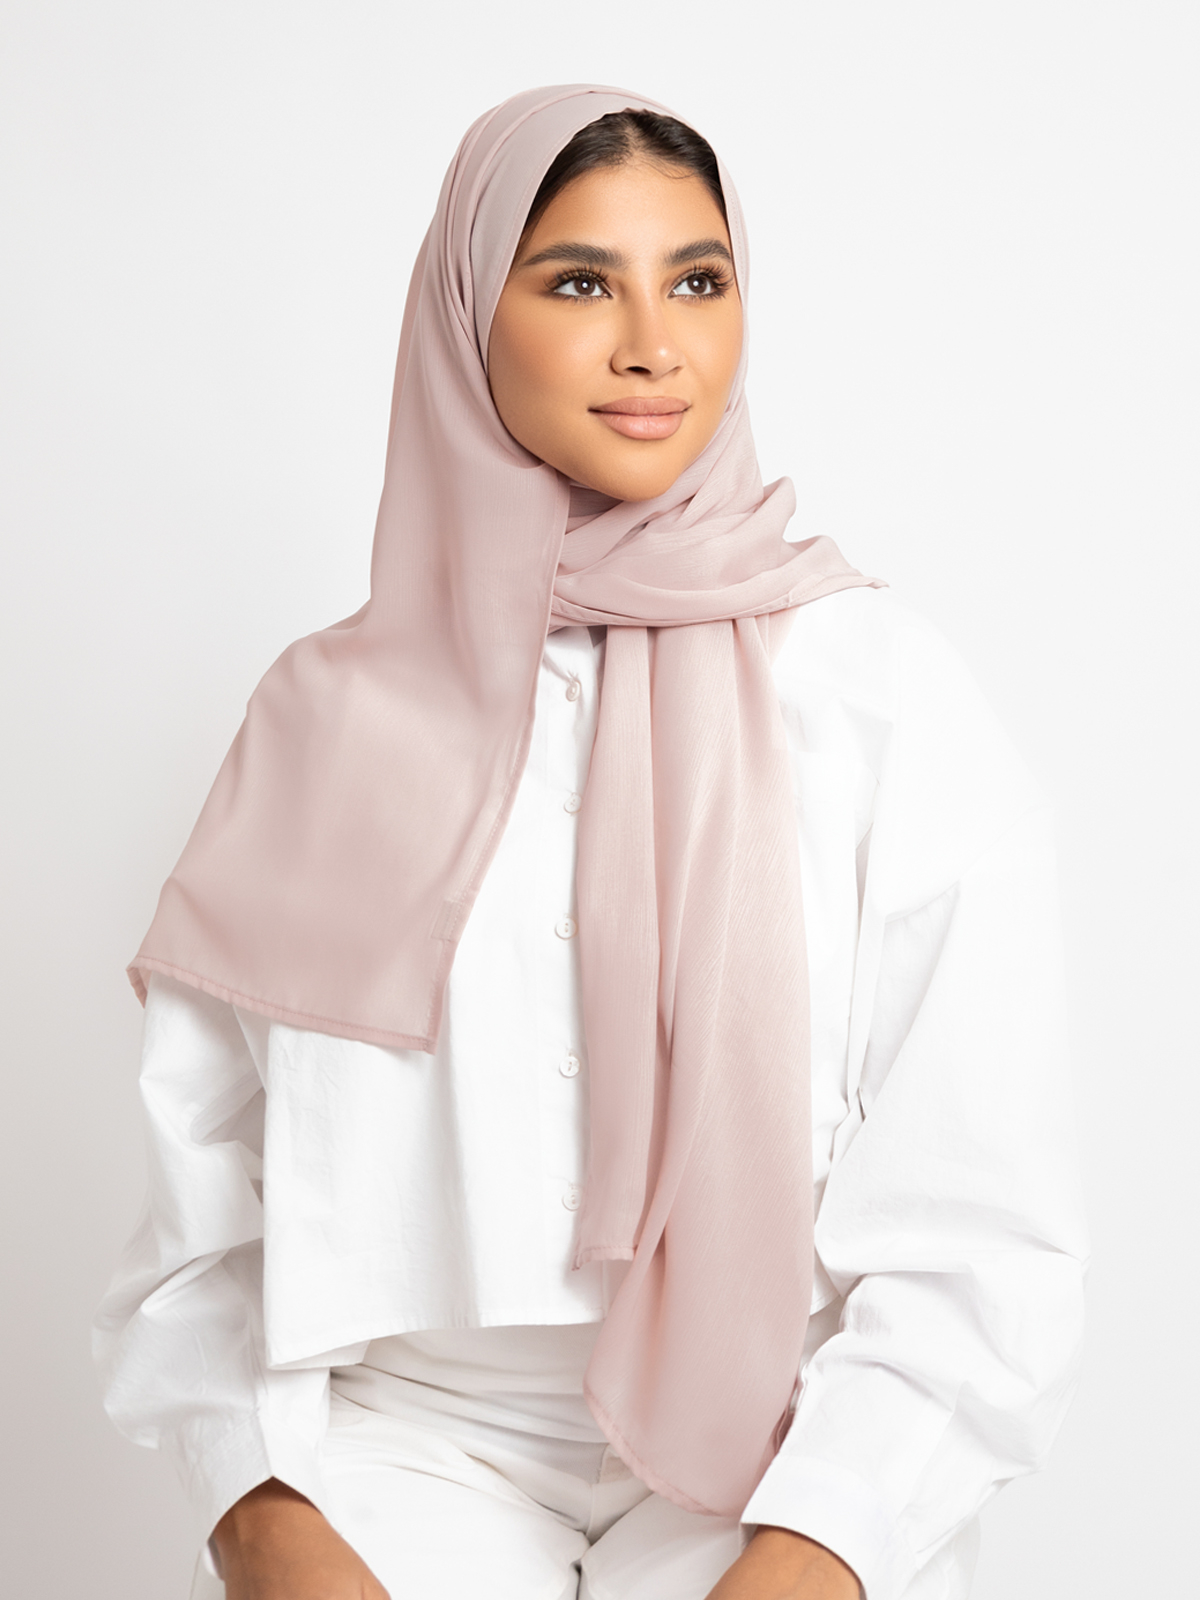 Luxurious chiffon hijab plain tarha 200 cm long rose color high quality material online in ksa by kaafmeem